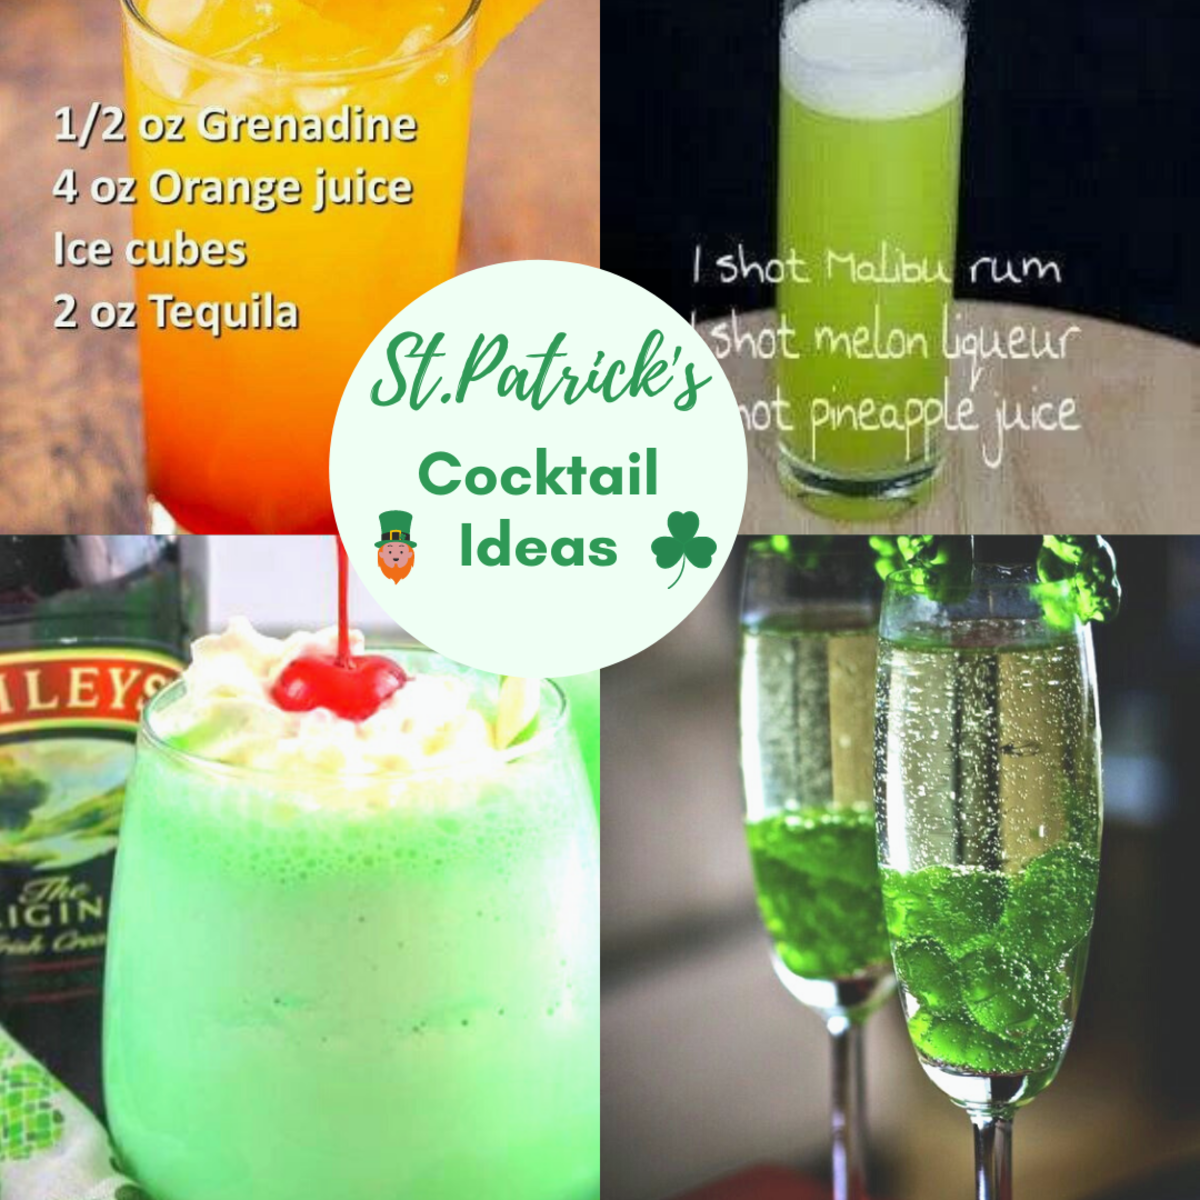 st-patricks-day-cocktails